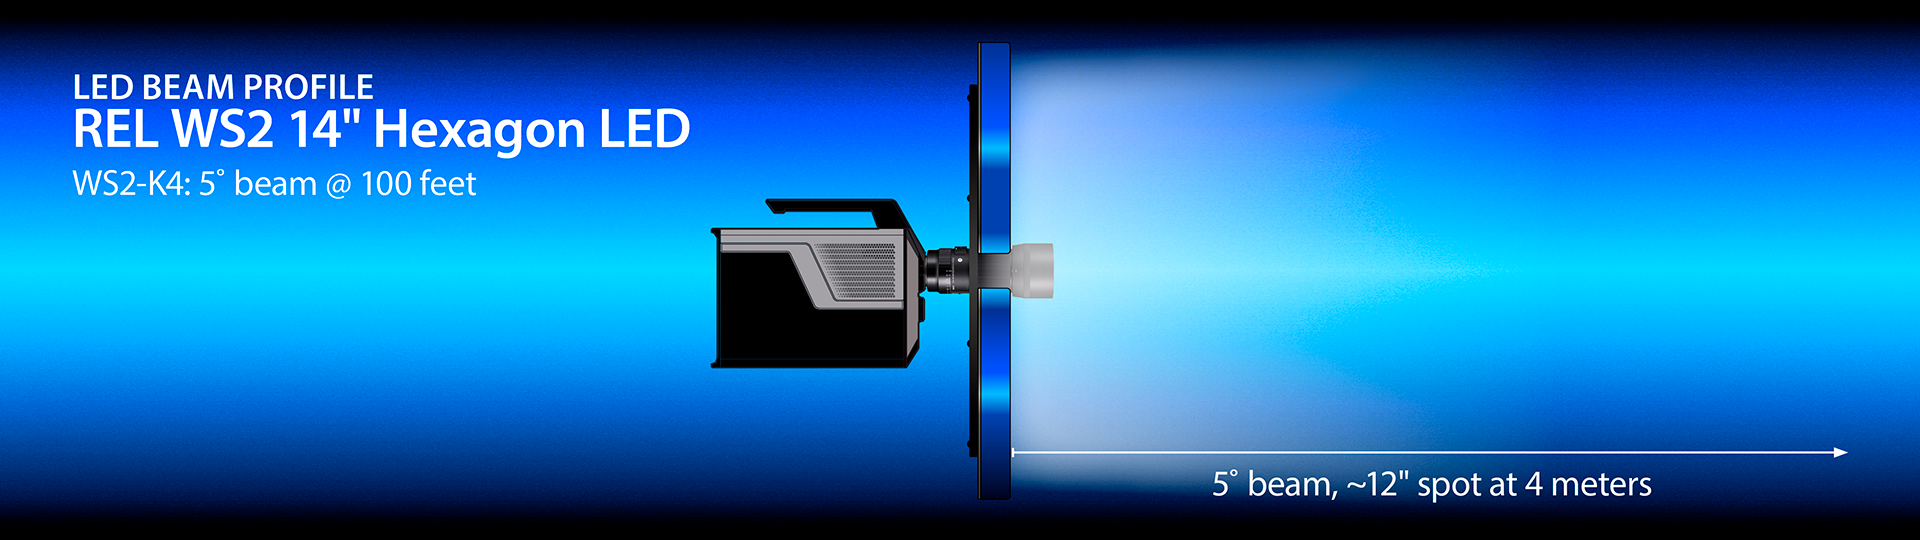 REL WS2-K4 LED beam profile illustration.